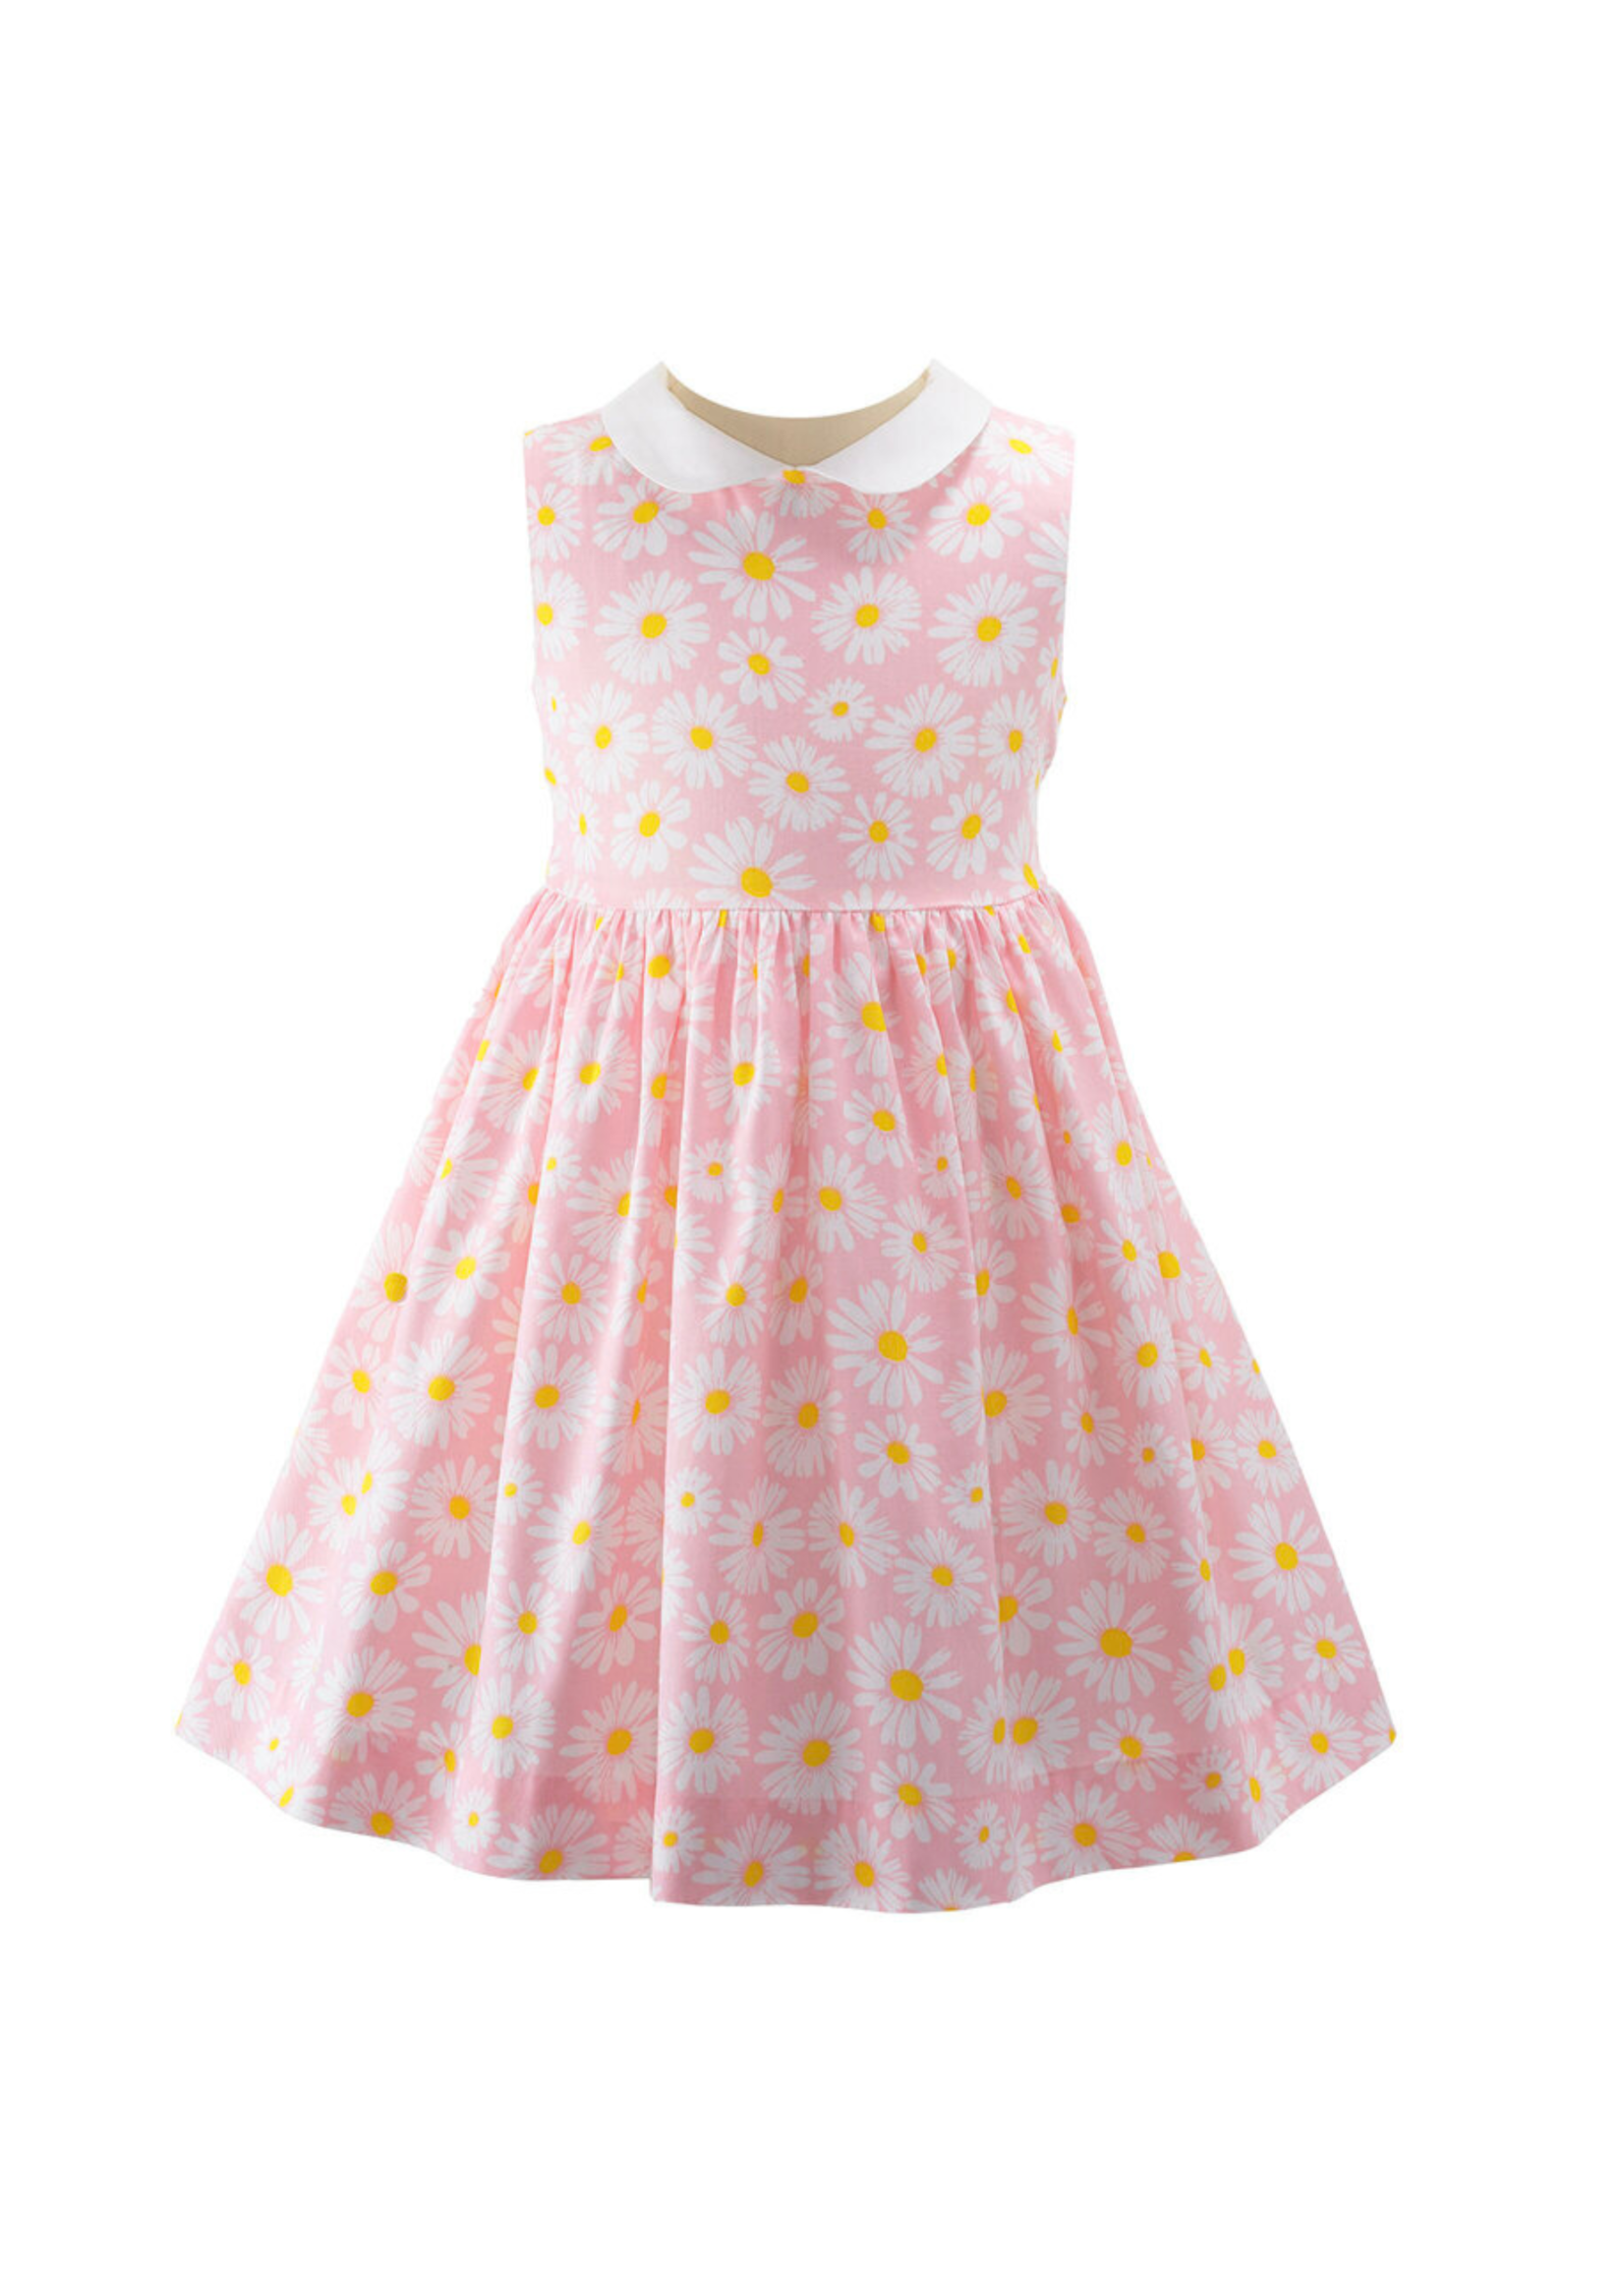 Rachel Riley Pink Daisy Dress - Covey House Children's Clothier